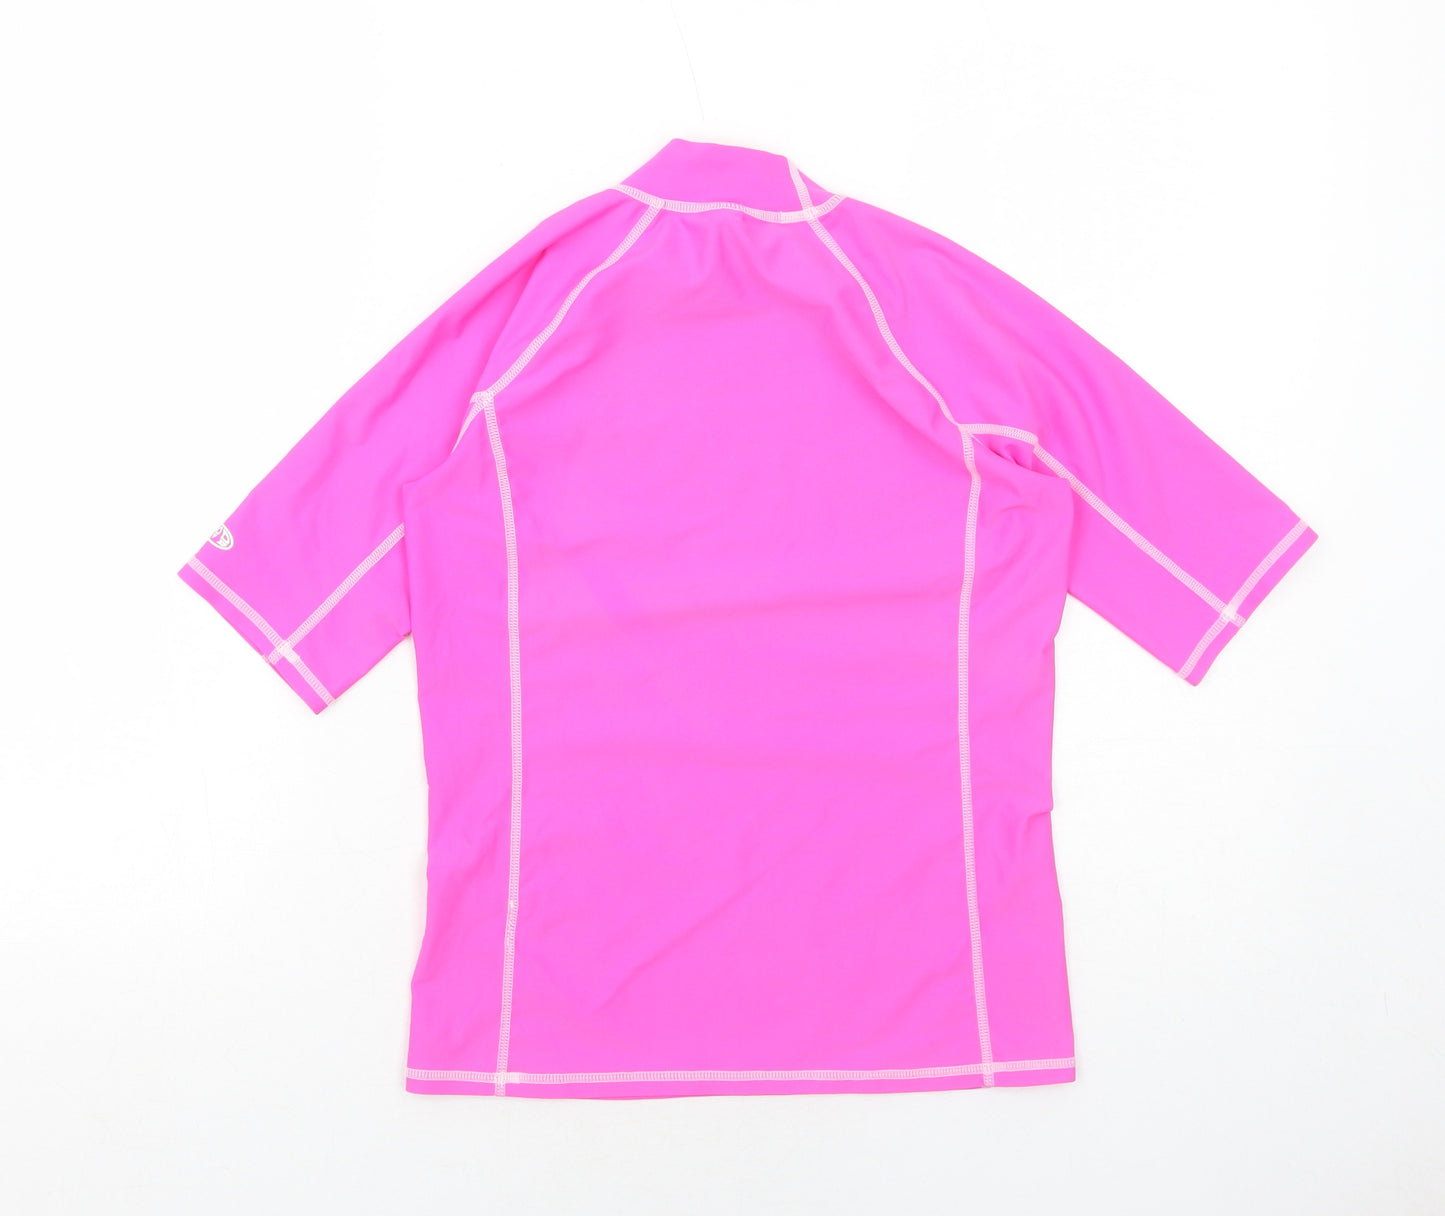 Animal Girls Pink Nylon Pullover T-Shirt Size 11-12 Years Mock Neck Pullover - Swim Top